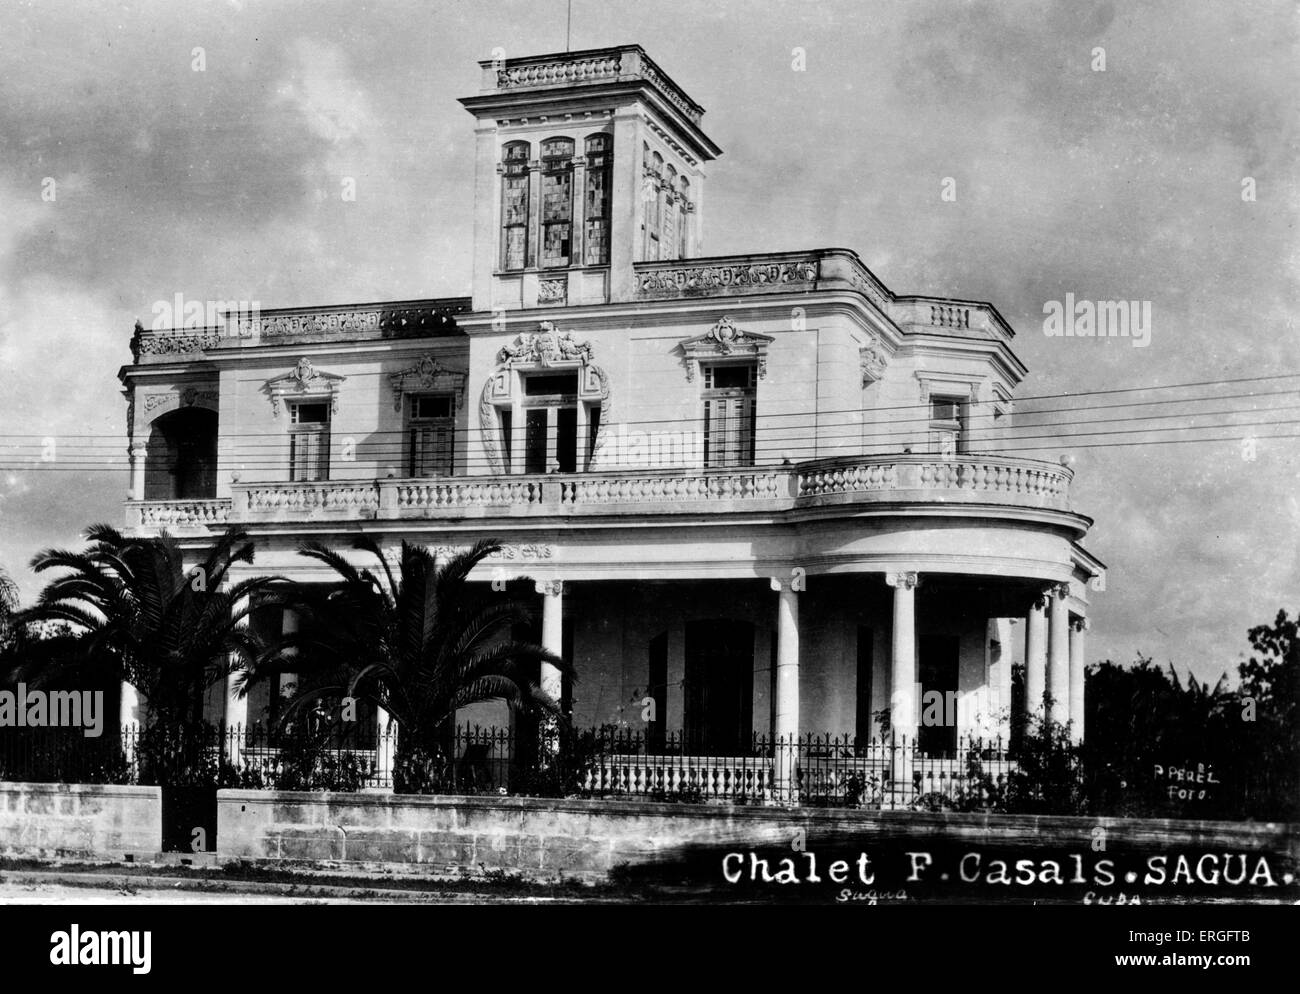 Chalet F. Casals, Sagua, Cuba. 20th century. Stock Photo